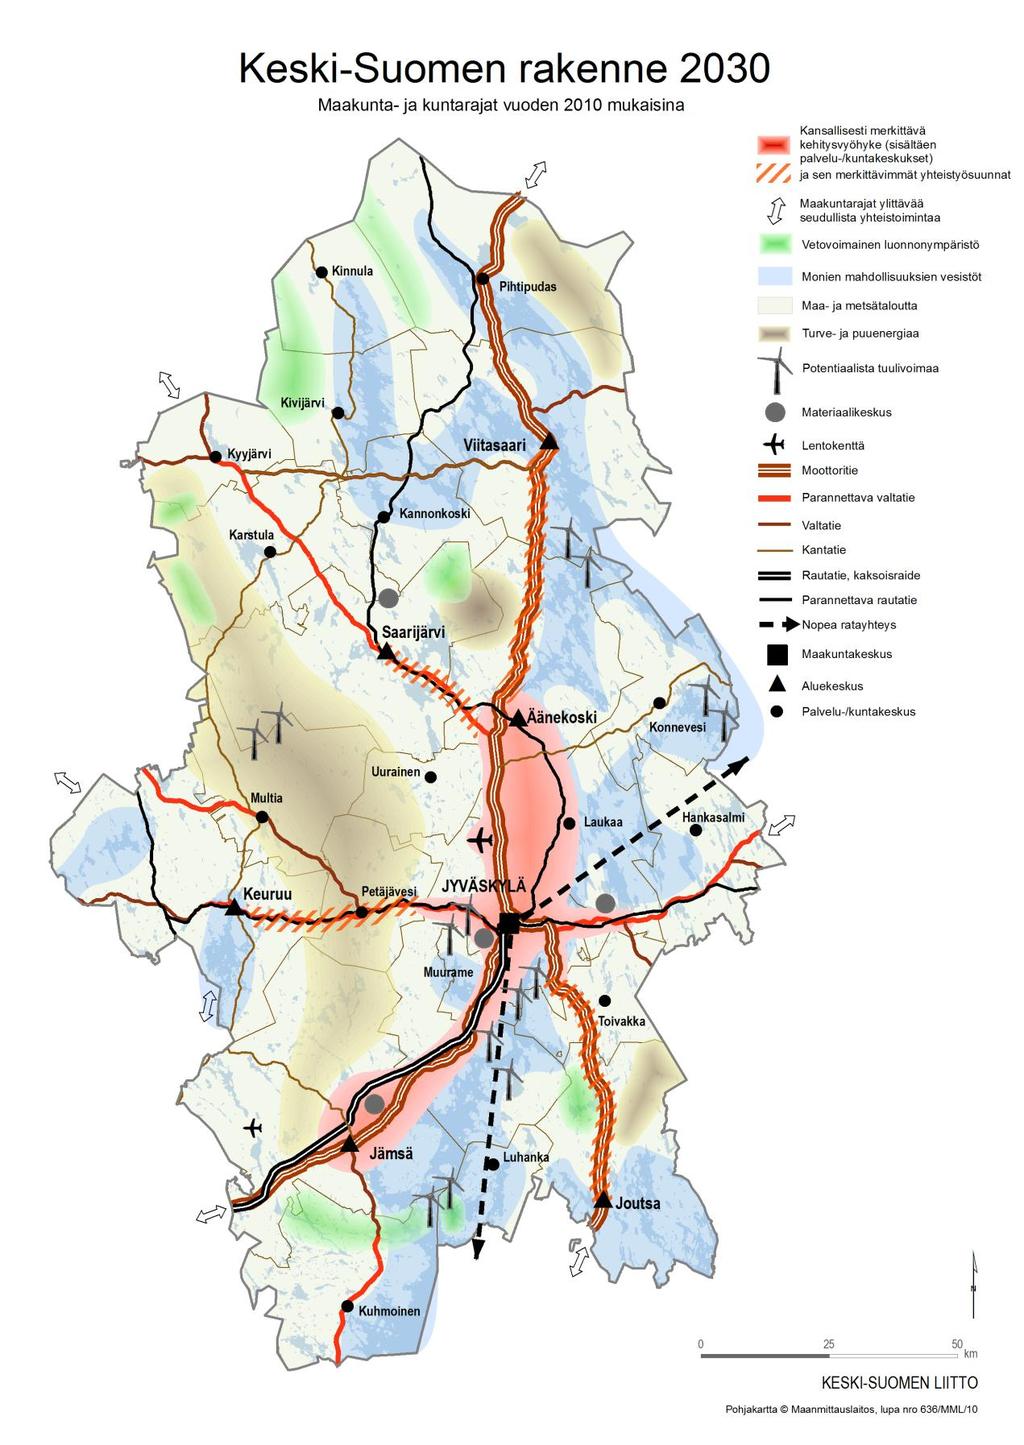 5 Keski-Suomen rakenne 2030